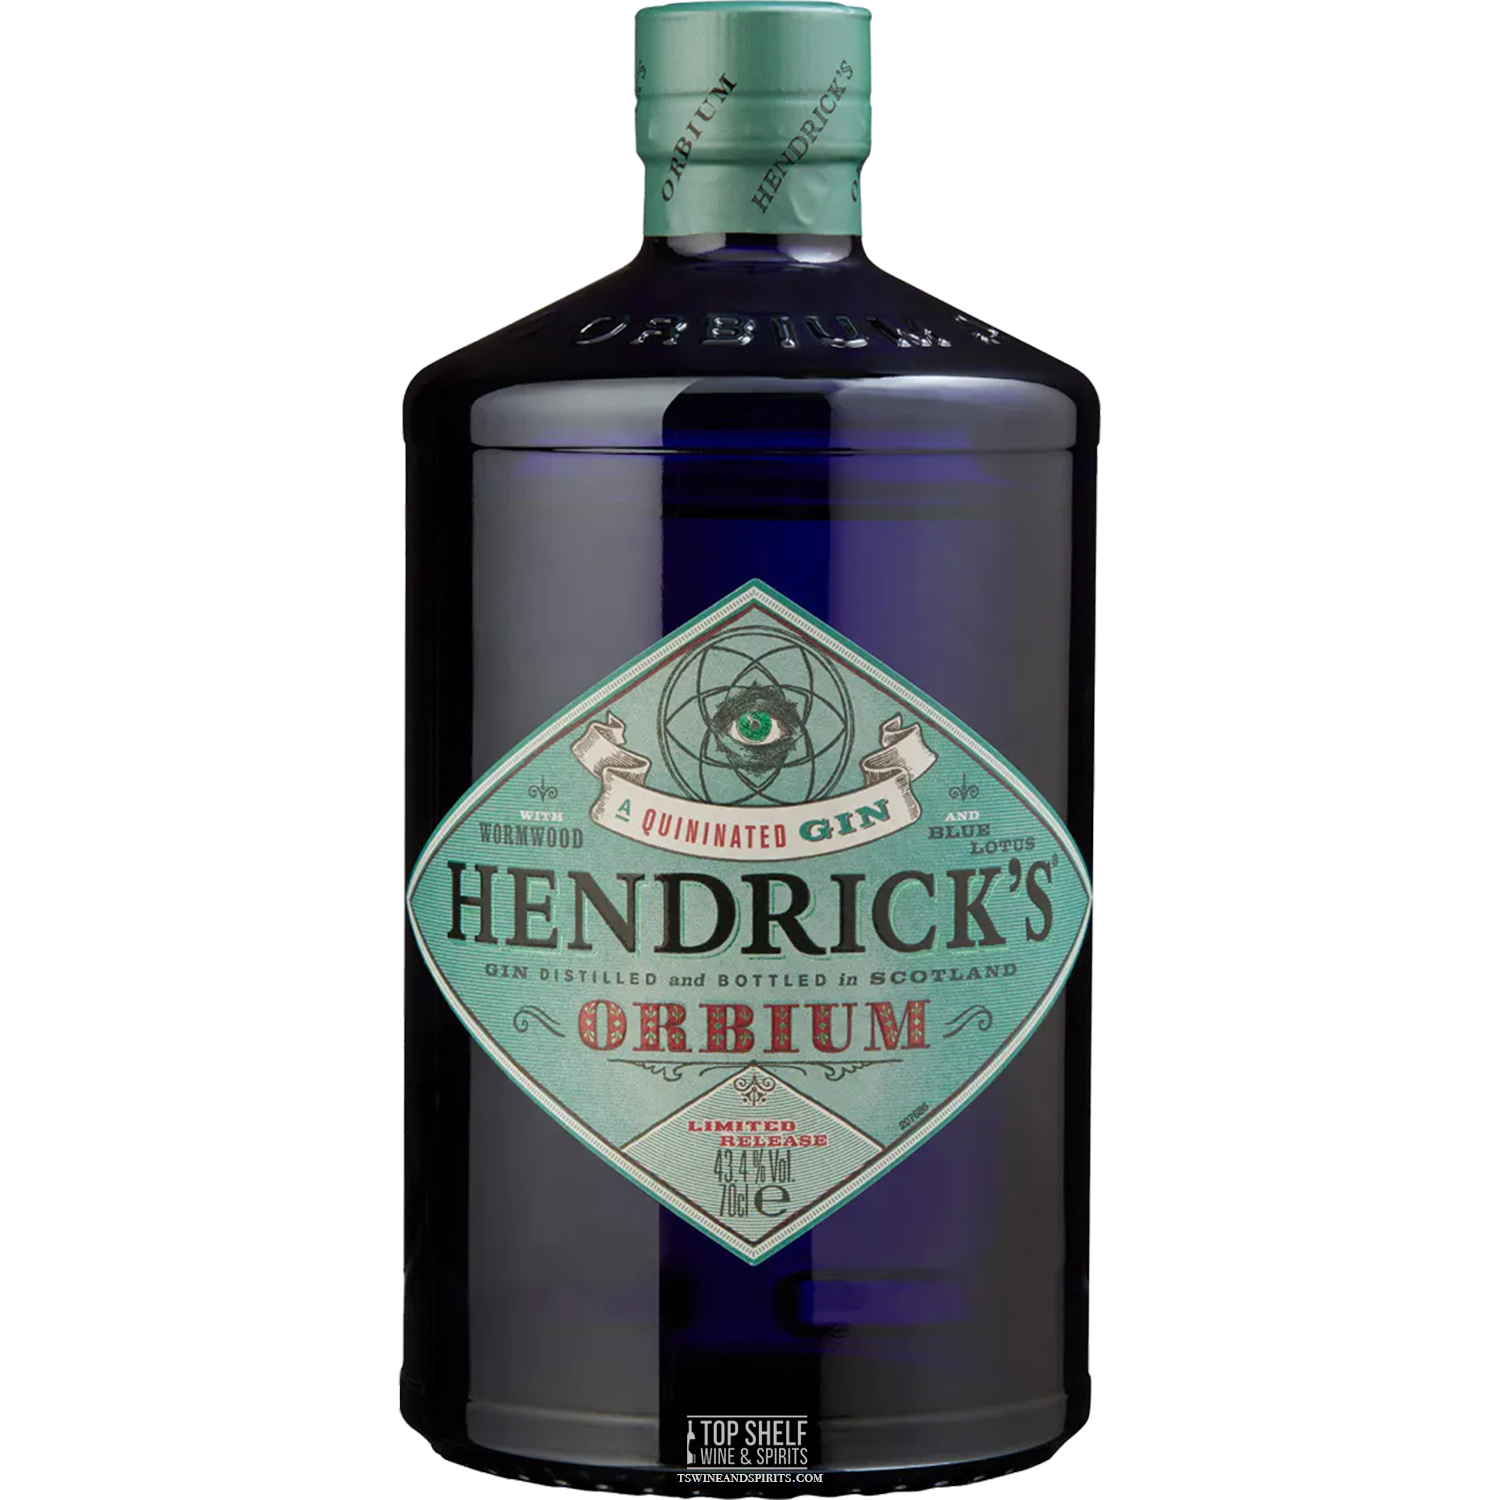 Hendrick’s Orbium Limited Release Gin